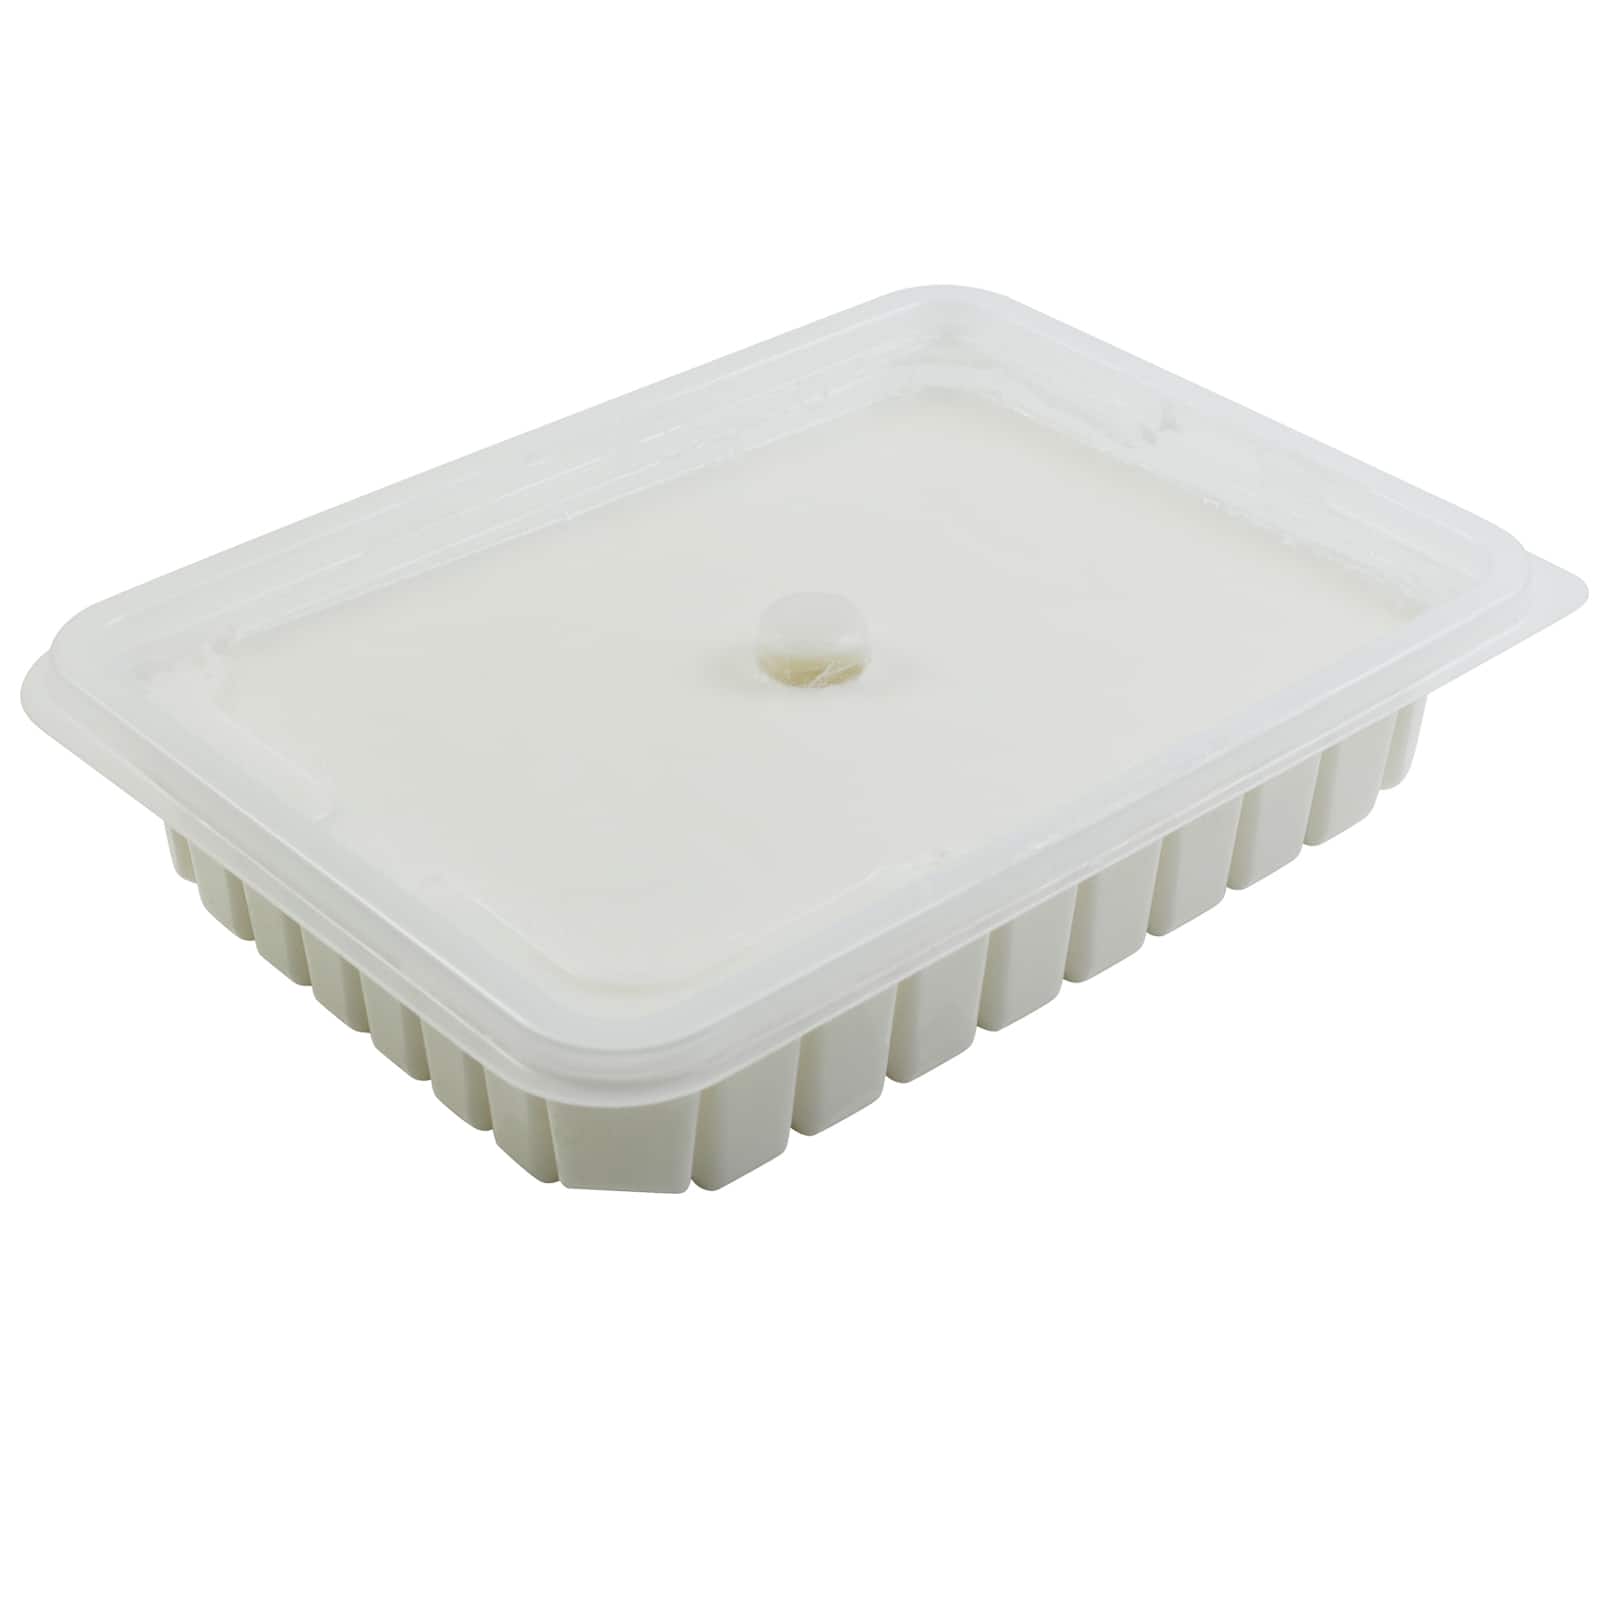 Premium Oatmeal MP Soap Base - 2 lb Tray